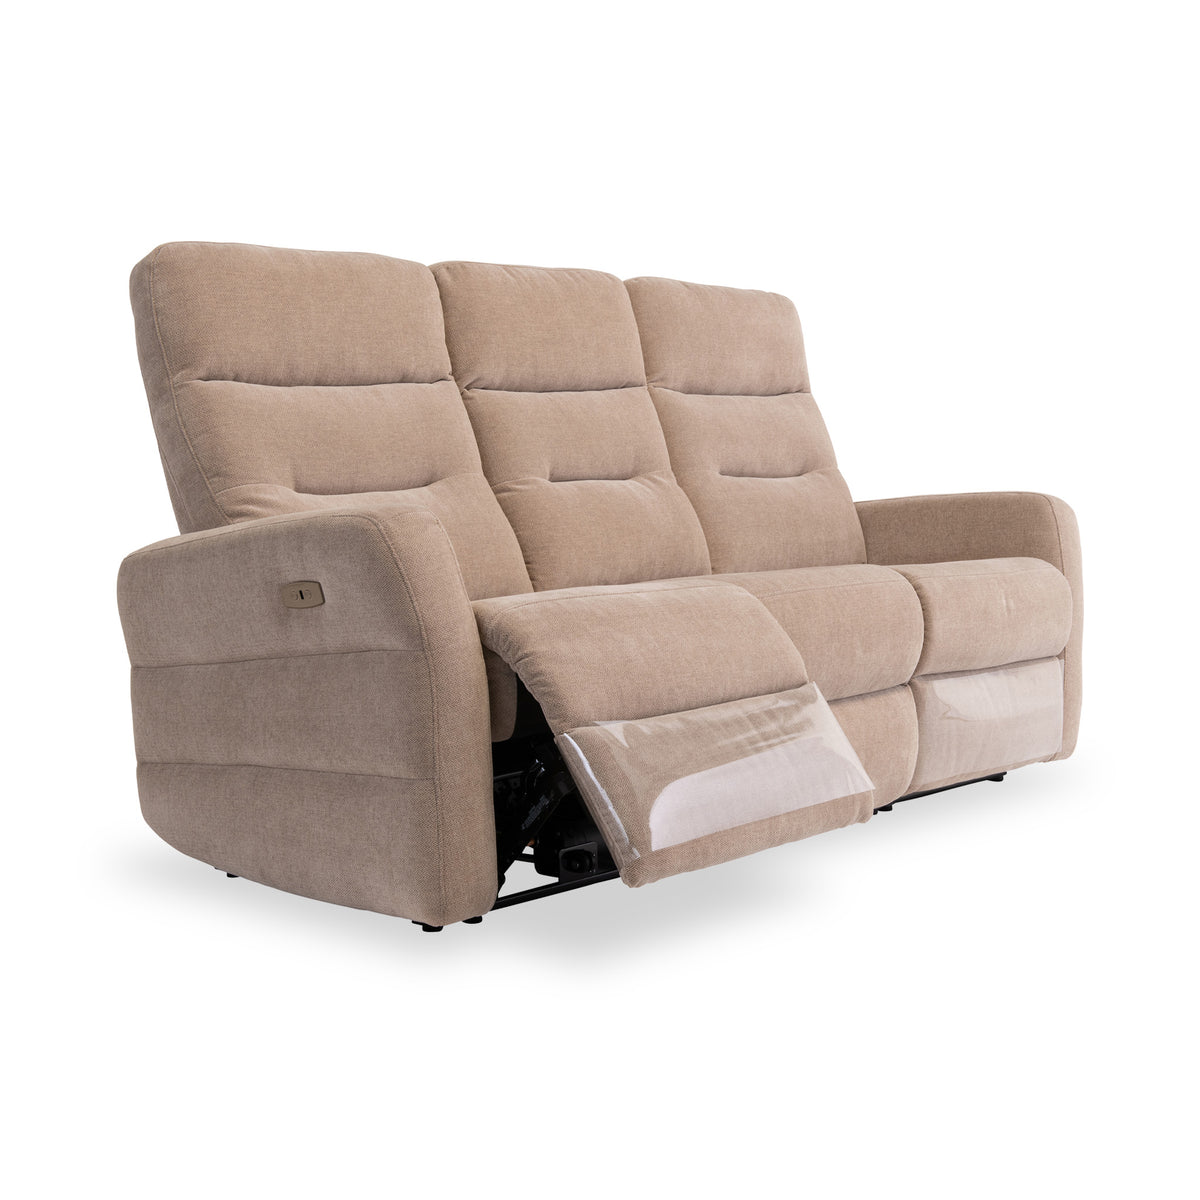 Dalton Mink Fabric Electric Reclining 3 Seater Sofa from Roseland furniture